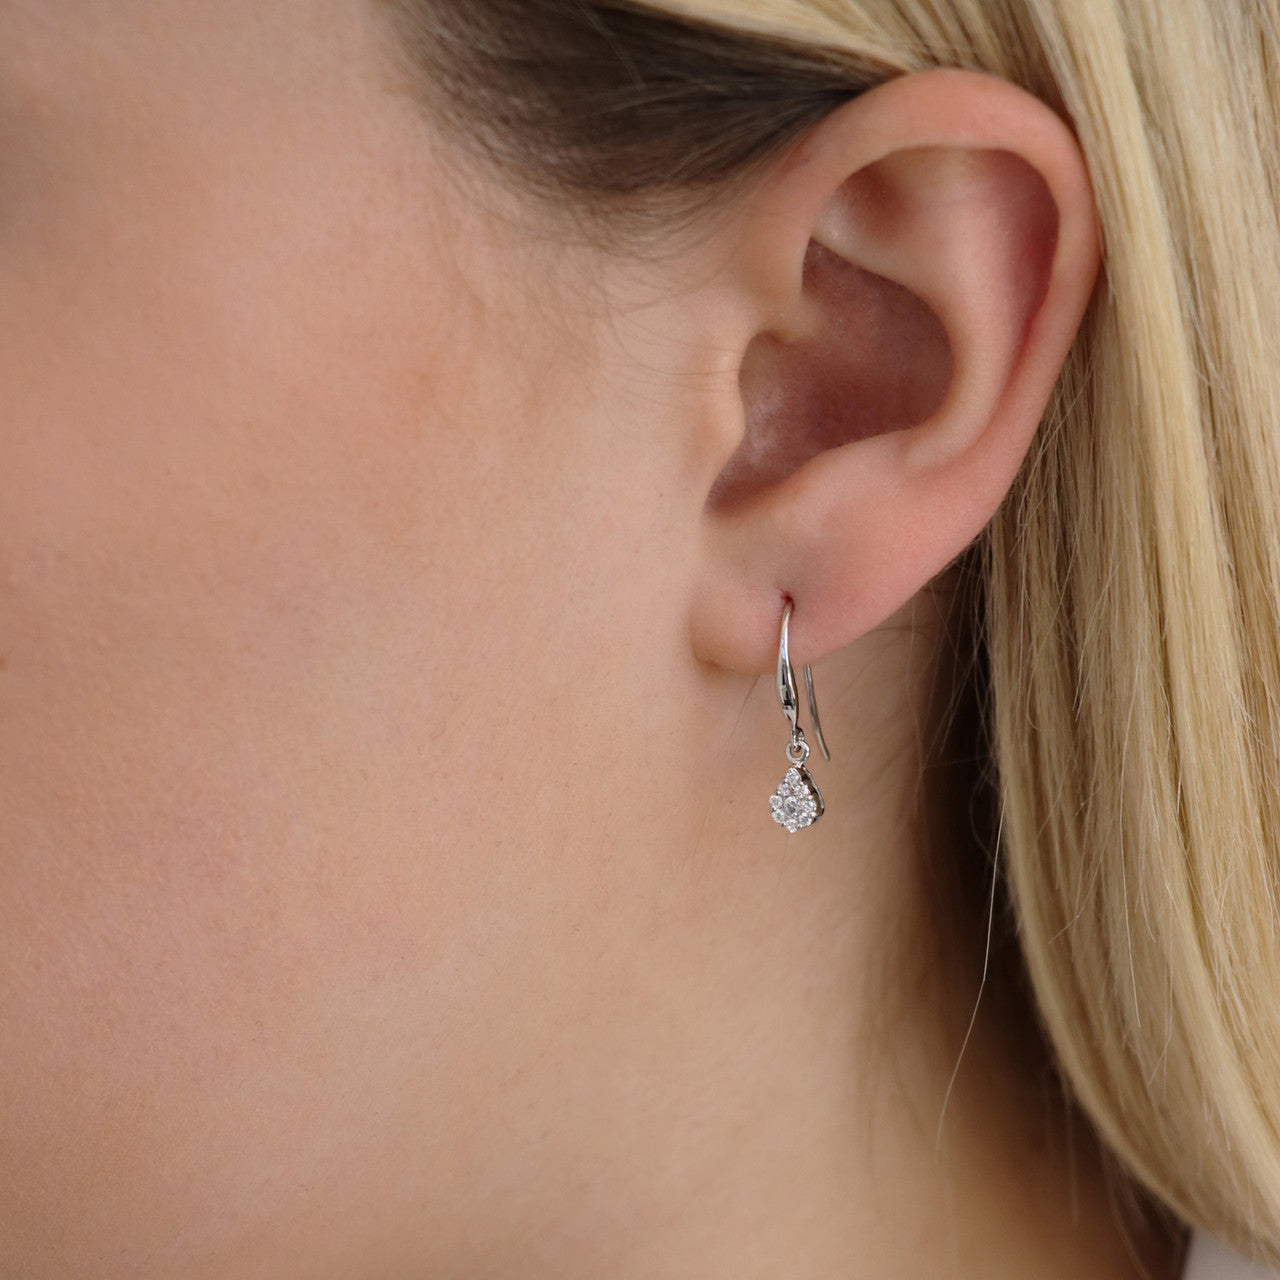 Ice Jewellery Tear Drop Hook Diamond Earrings with 0.15ct Diamonds in 9K White Gold - 9WTDSH15GH | Ice Jewellery Australia